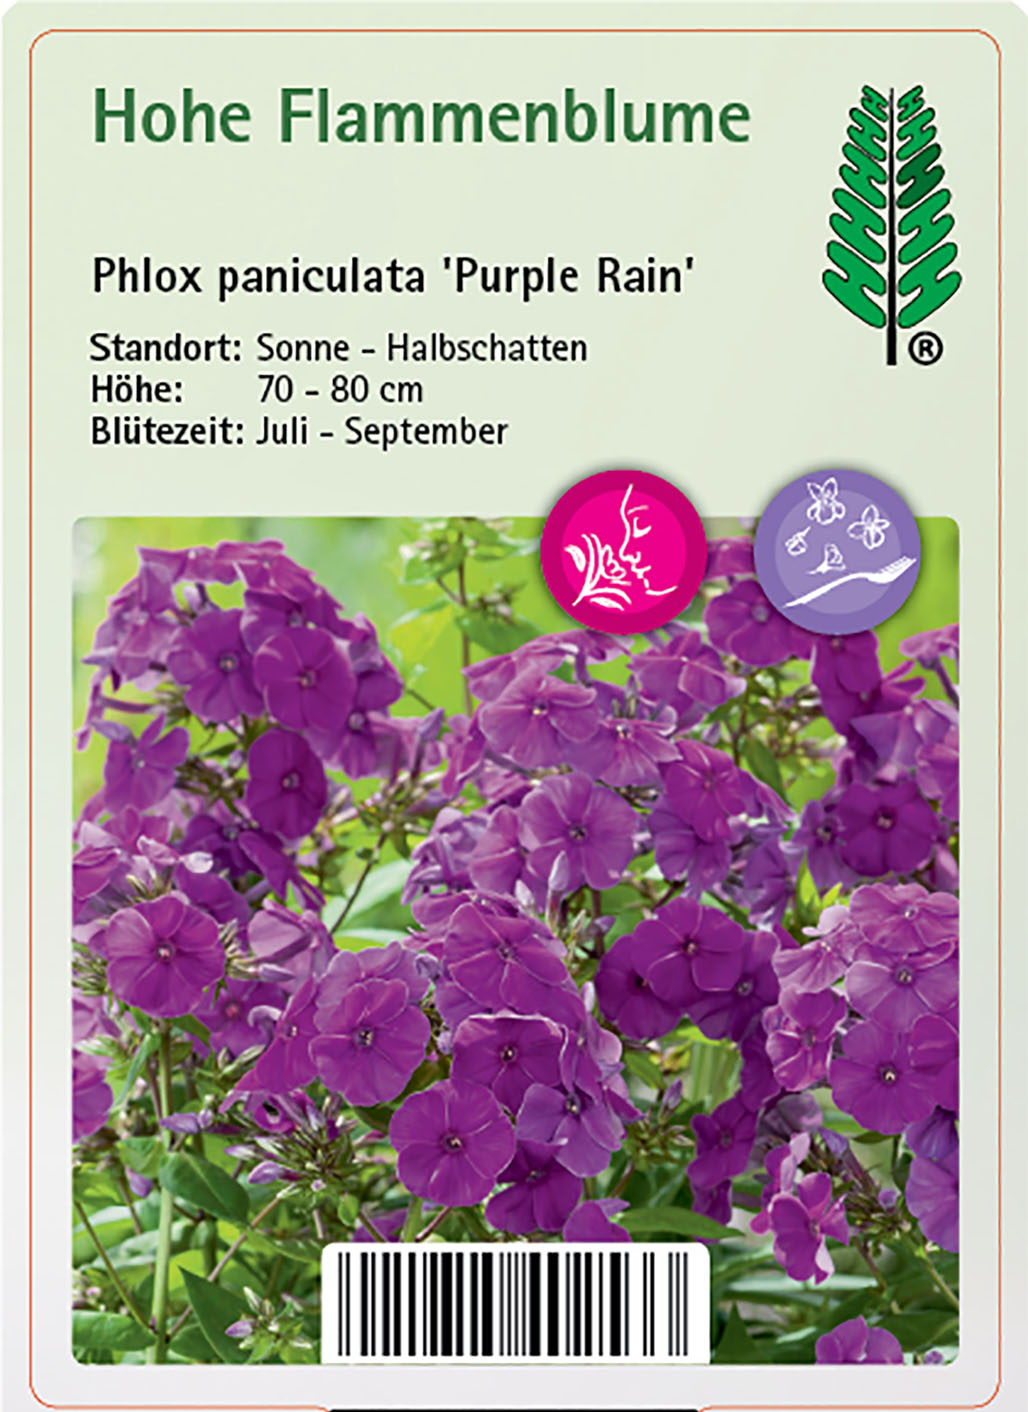 Hohe Flammenblume - Phlox paniculata 'Purple Rain', 11cm Topf